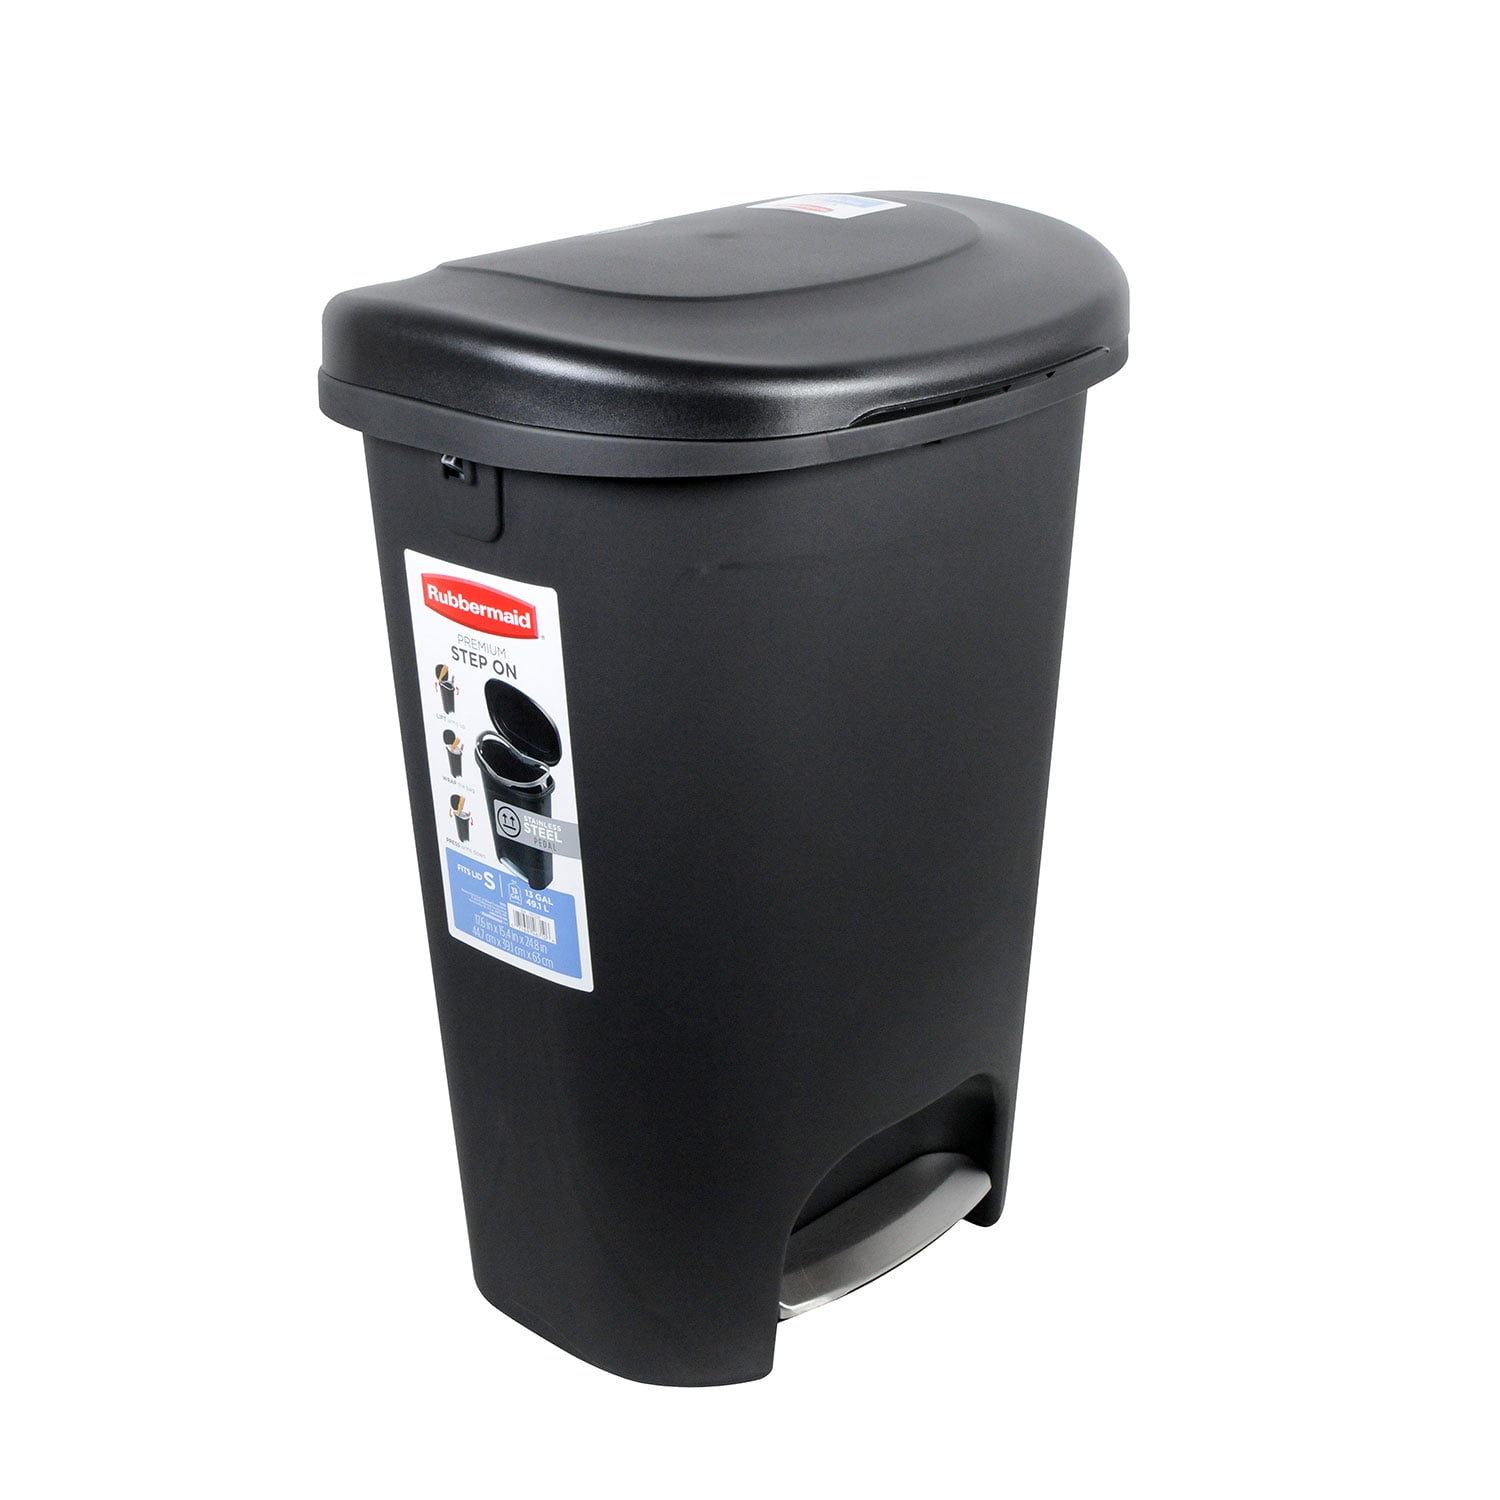  Rubbermaid Classic 13 Gallon Premium Step-On Trash Can